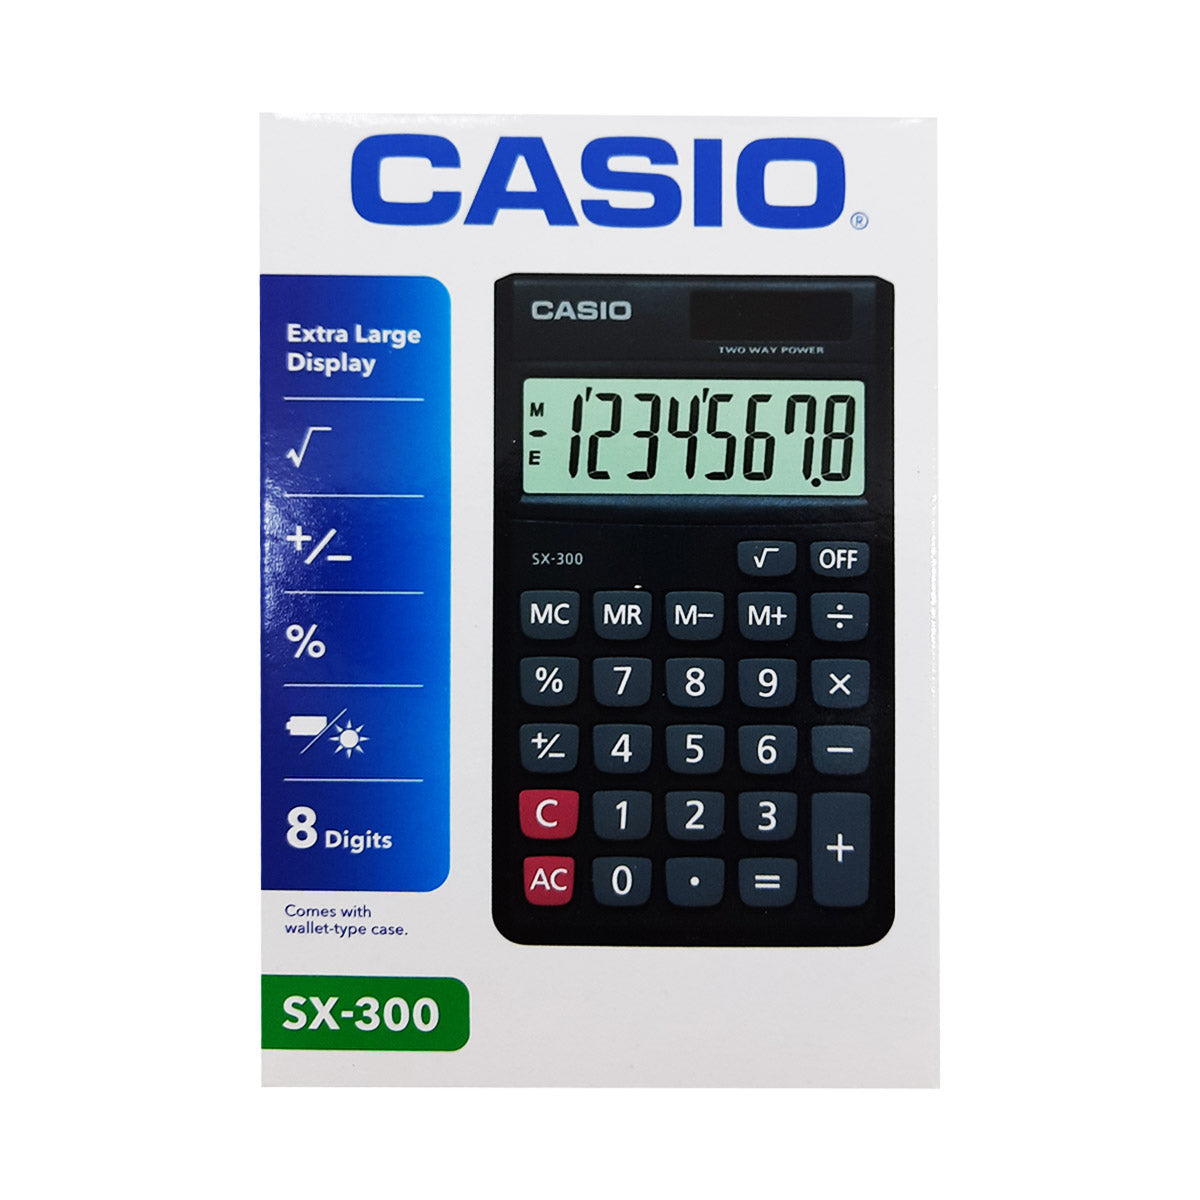 Casio S300 Dual Power 8 Digit Calculator - Calculators from najmaonline.com Abu Dhabi, Dubai - UAE